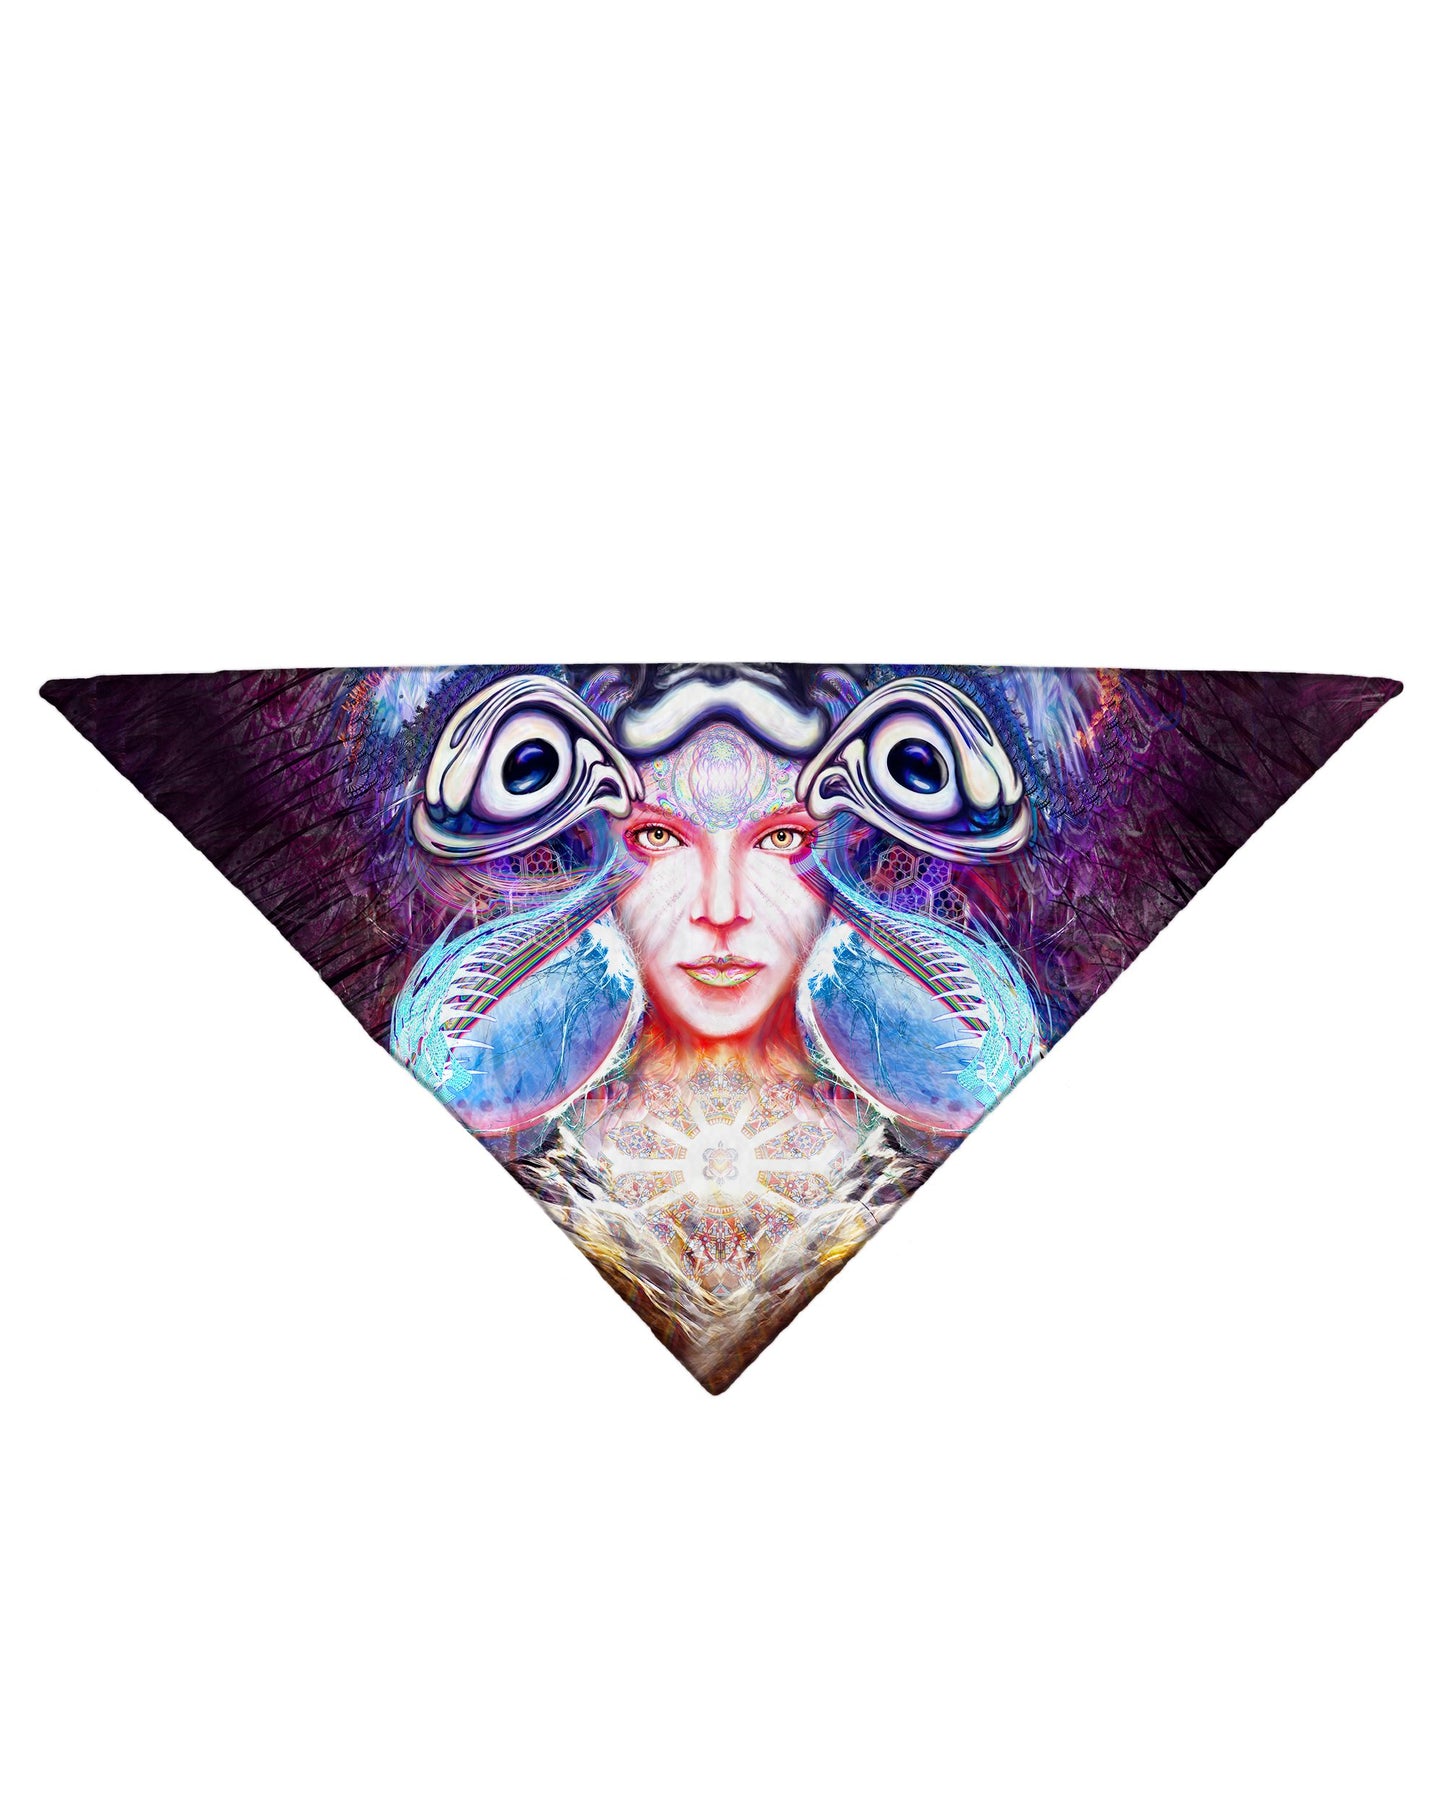 Diagonally folded psychedelic visionary art printed headband.